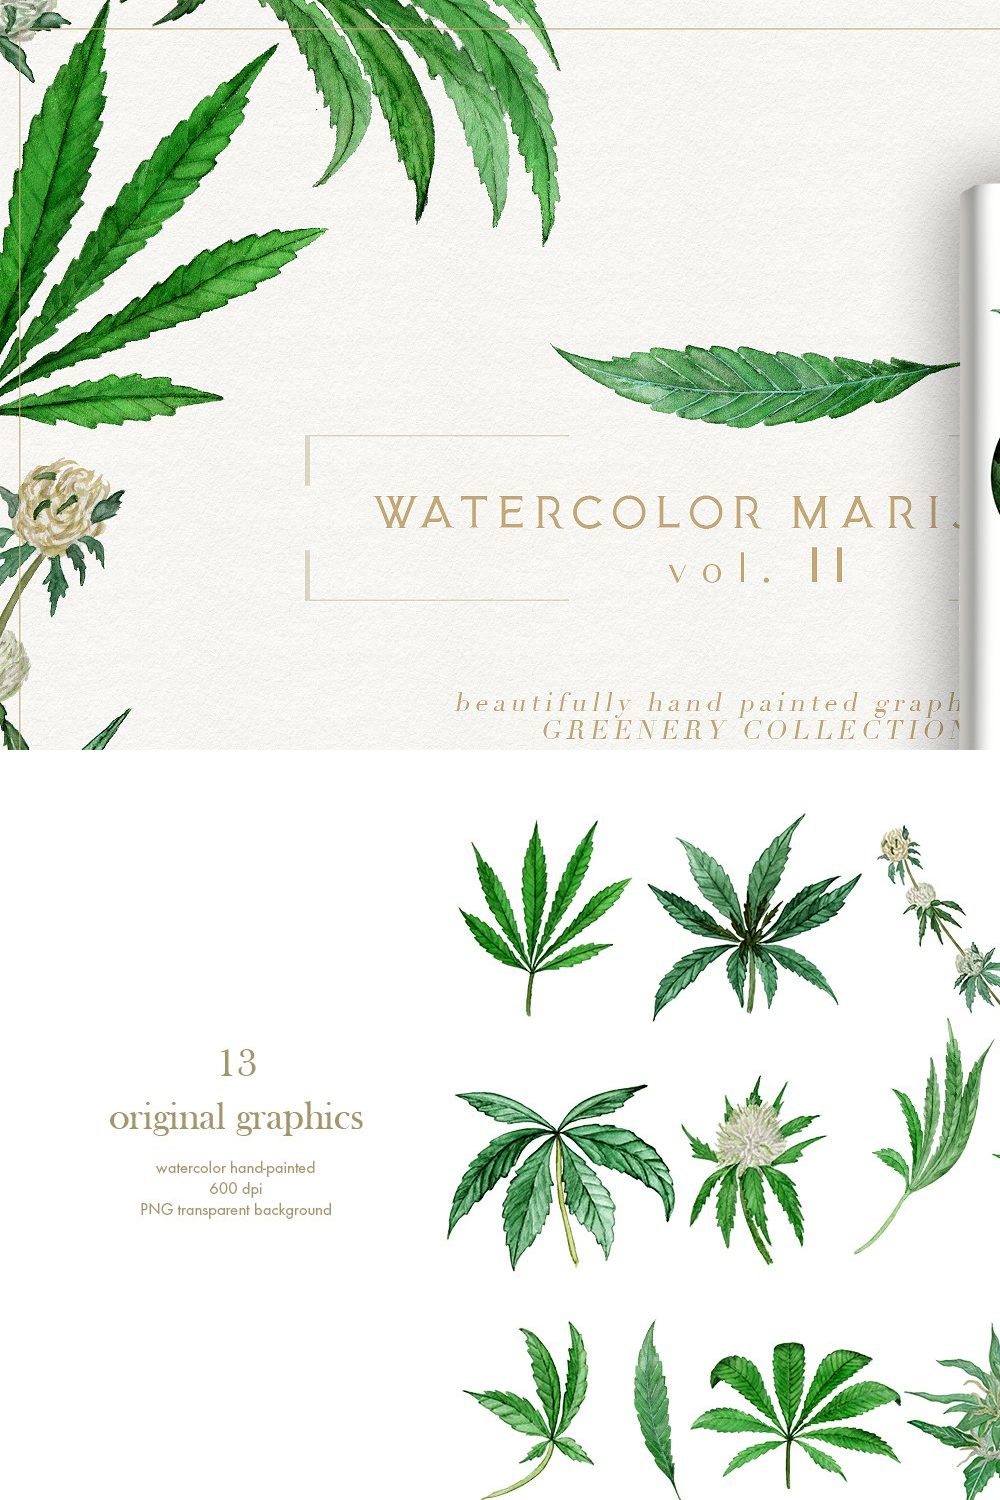 Watercolor Marijuana Vol.II pinterest preview image.